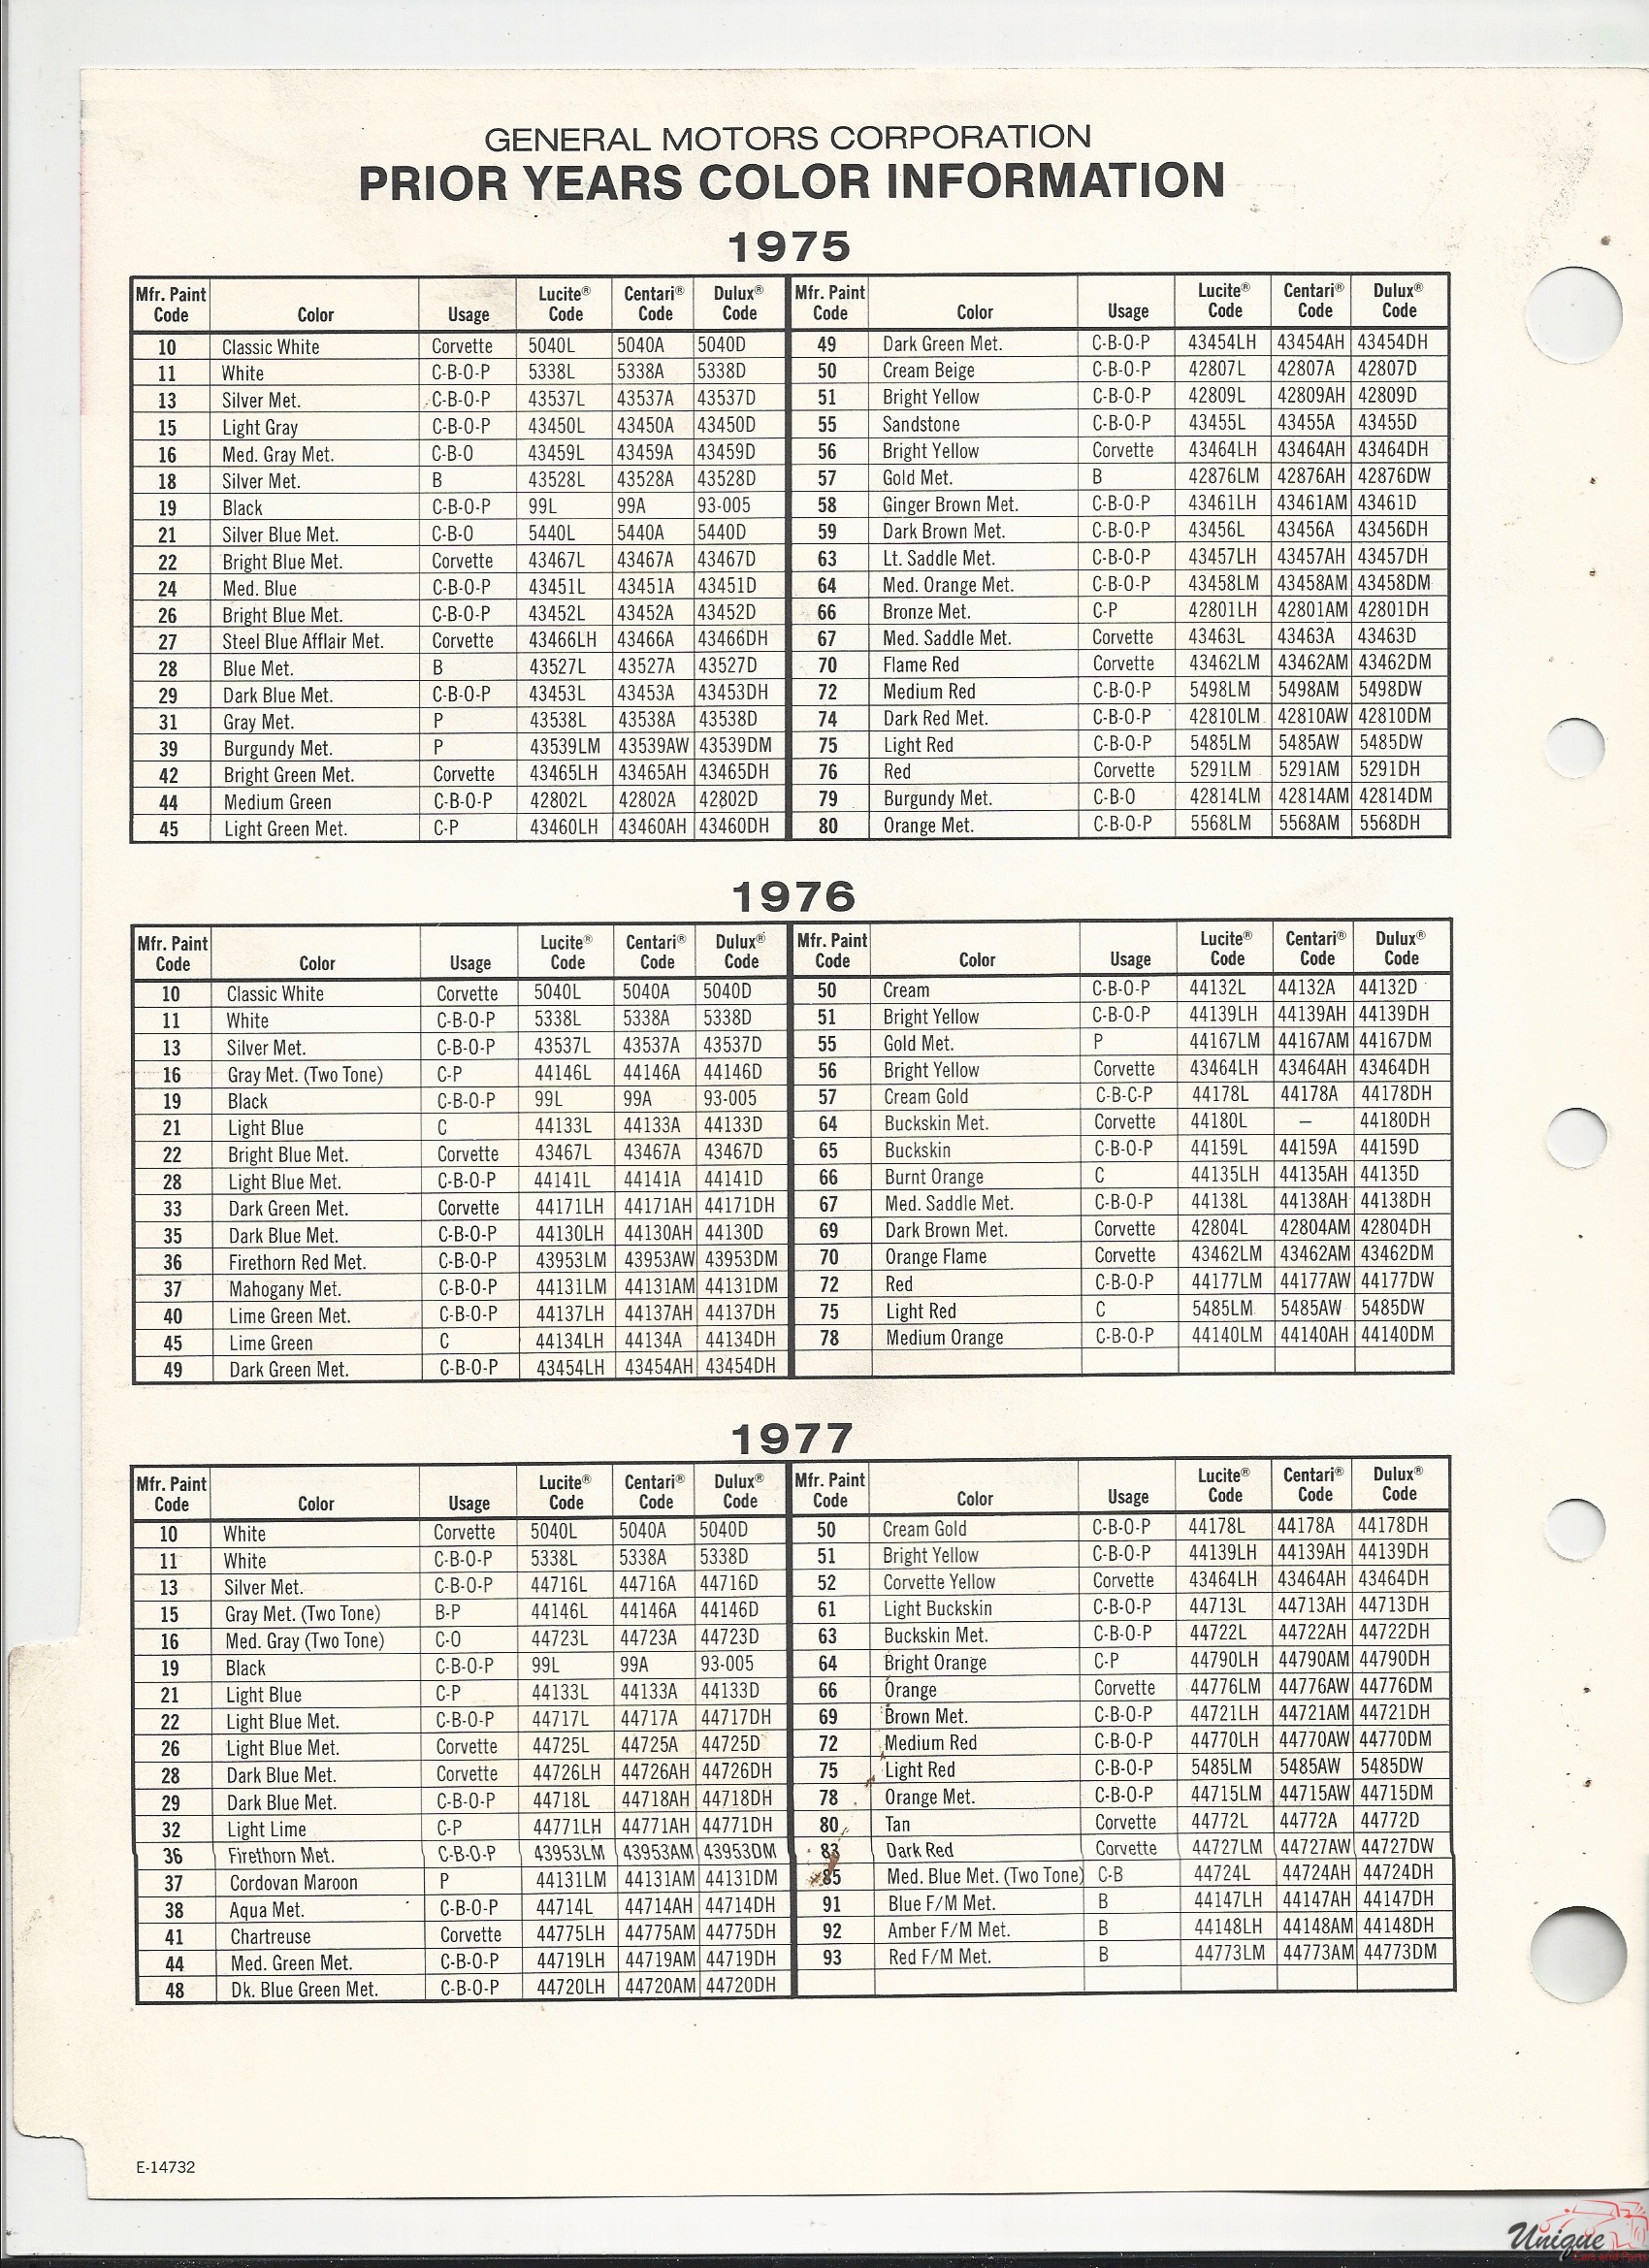 1978 GM-1 Paint Charts